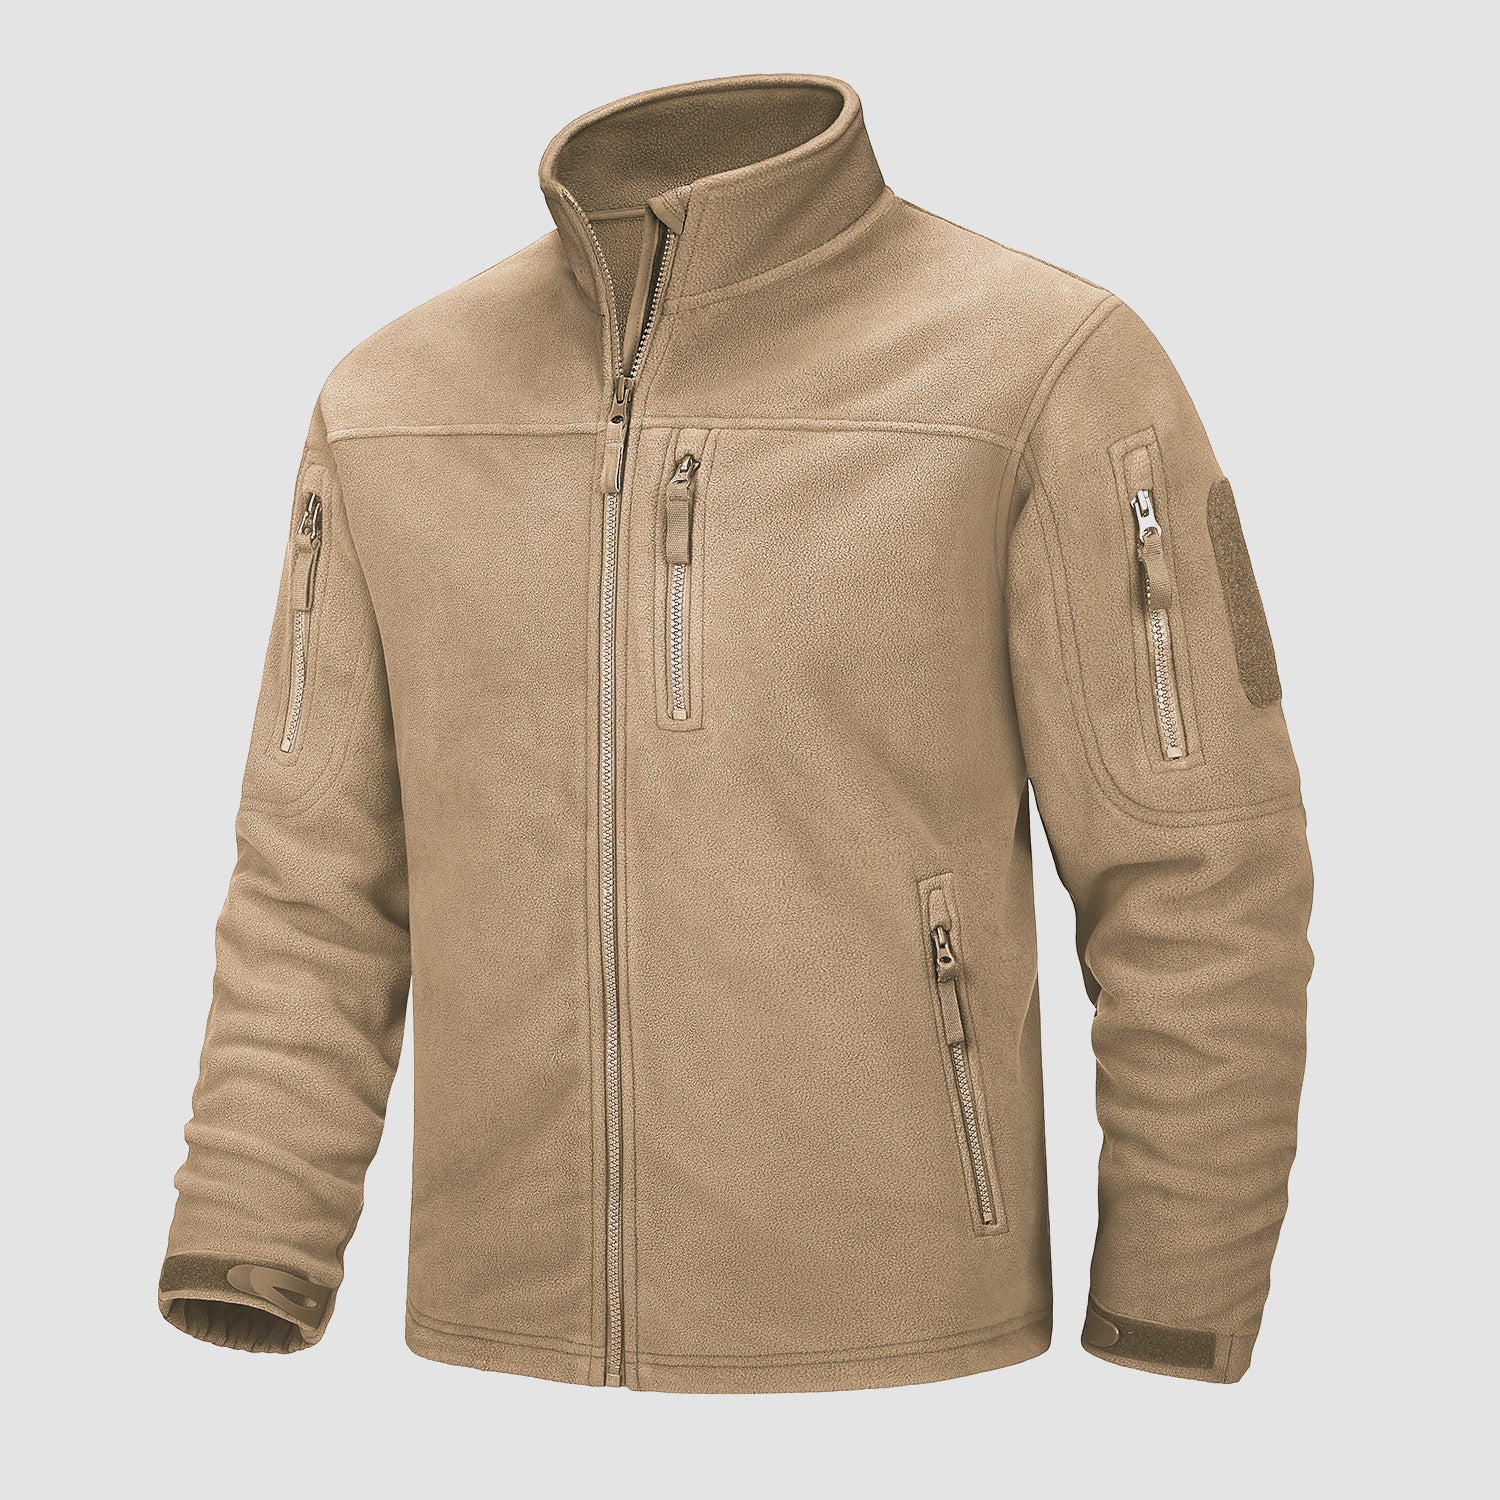 Men's Fleece Tactical Jacket Stand Collar Military Field Jackets